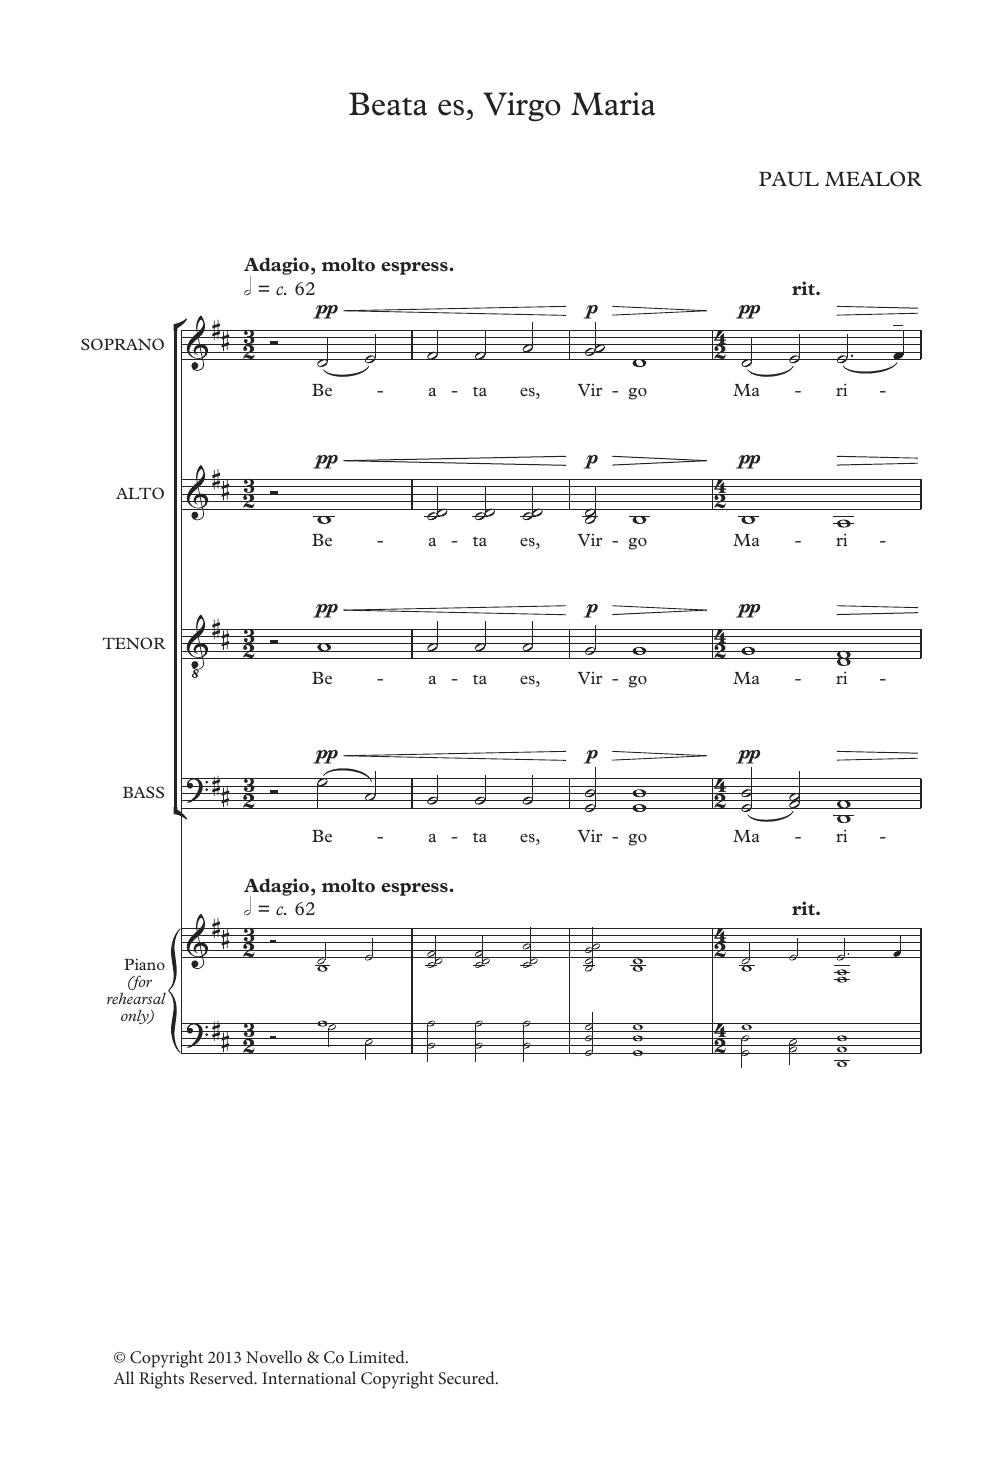 Paul Mealor Beata Es Virgo Maria Sheet Music Notes & Chords for SATB Choir - Download or Print PDF